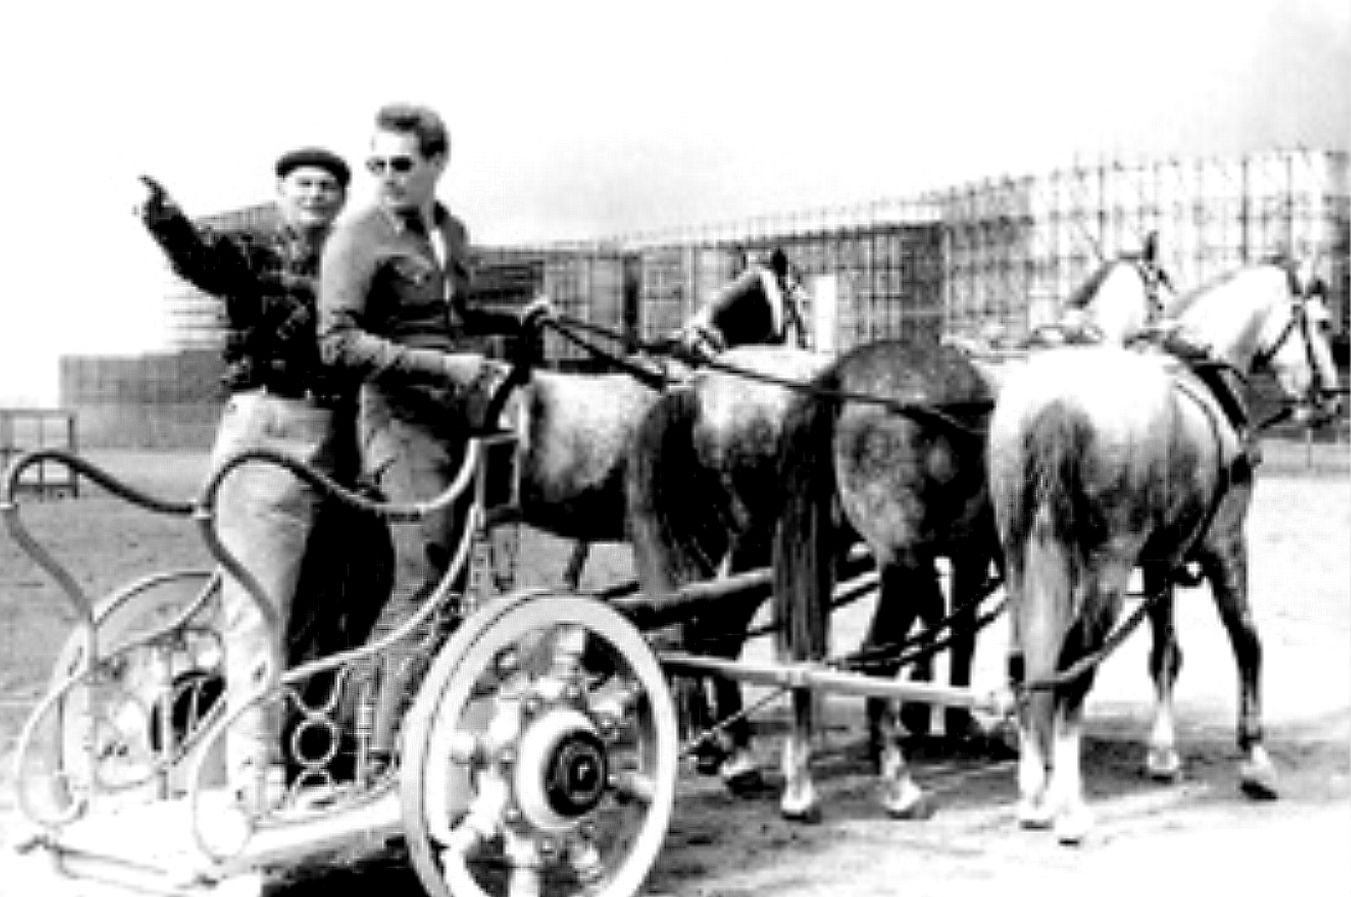 Ben Hur - Yakima Canutt instructing Charleton Heston